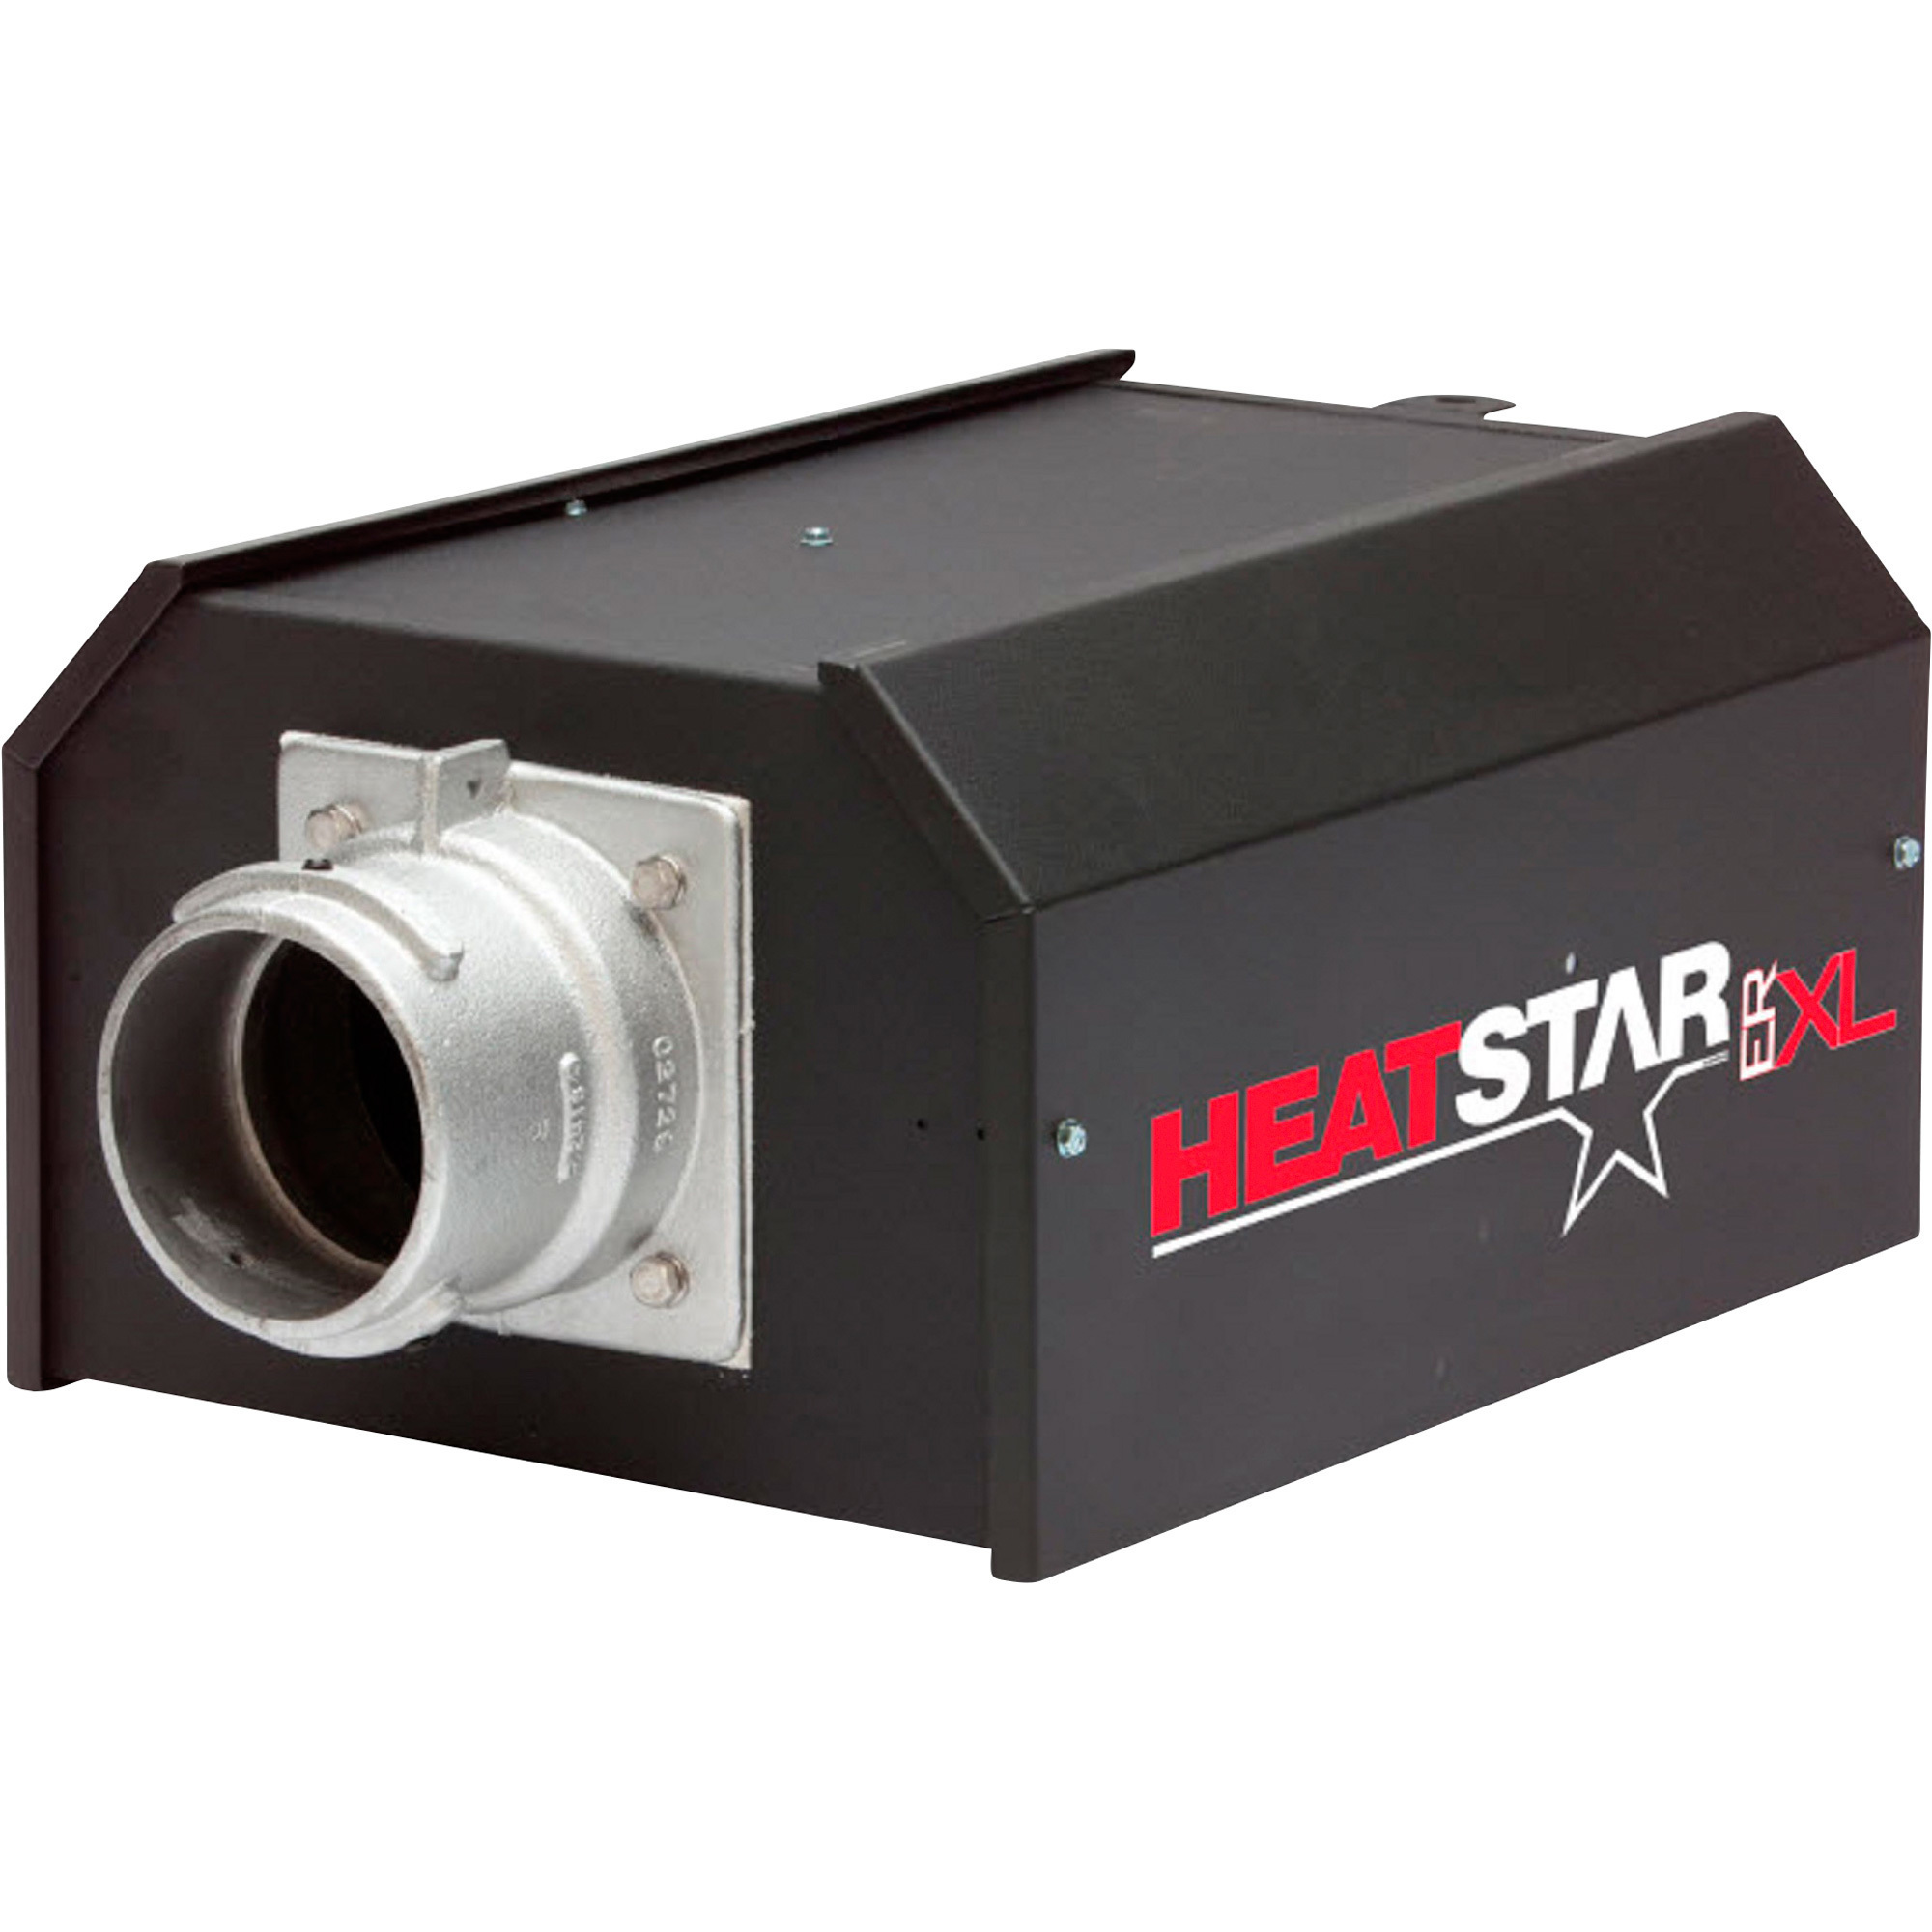 HeatStar Dual Fuel Low-Intensity Radiant Tube Heater, 125,000 BTU, Natural Gas or Propane, Model ERXL125N